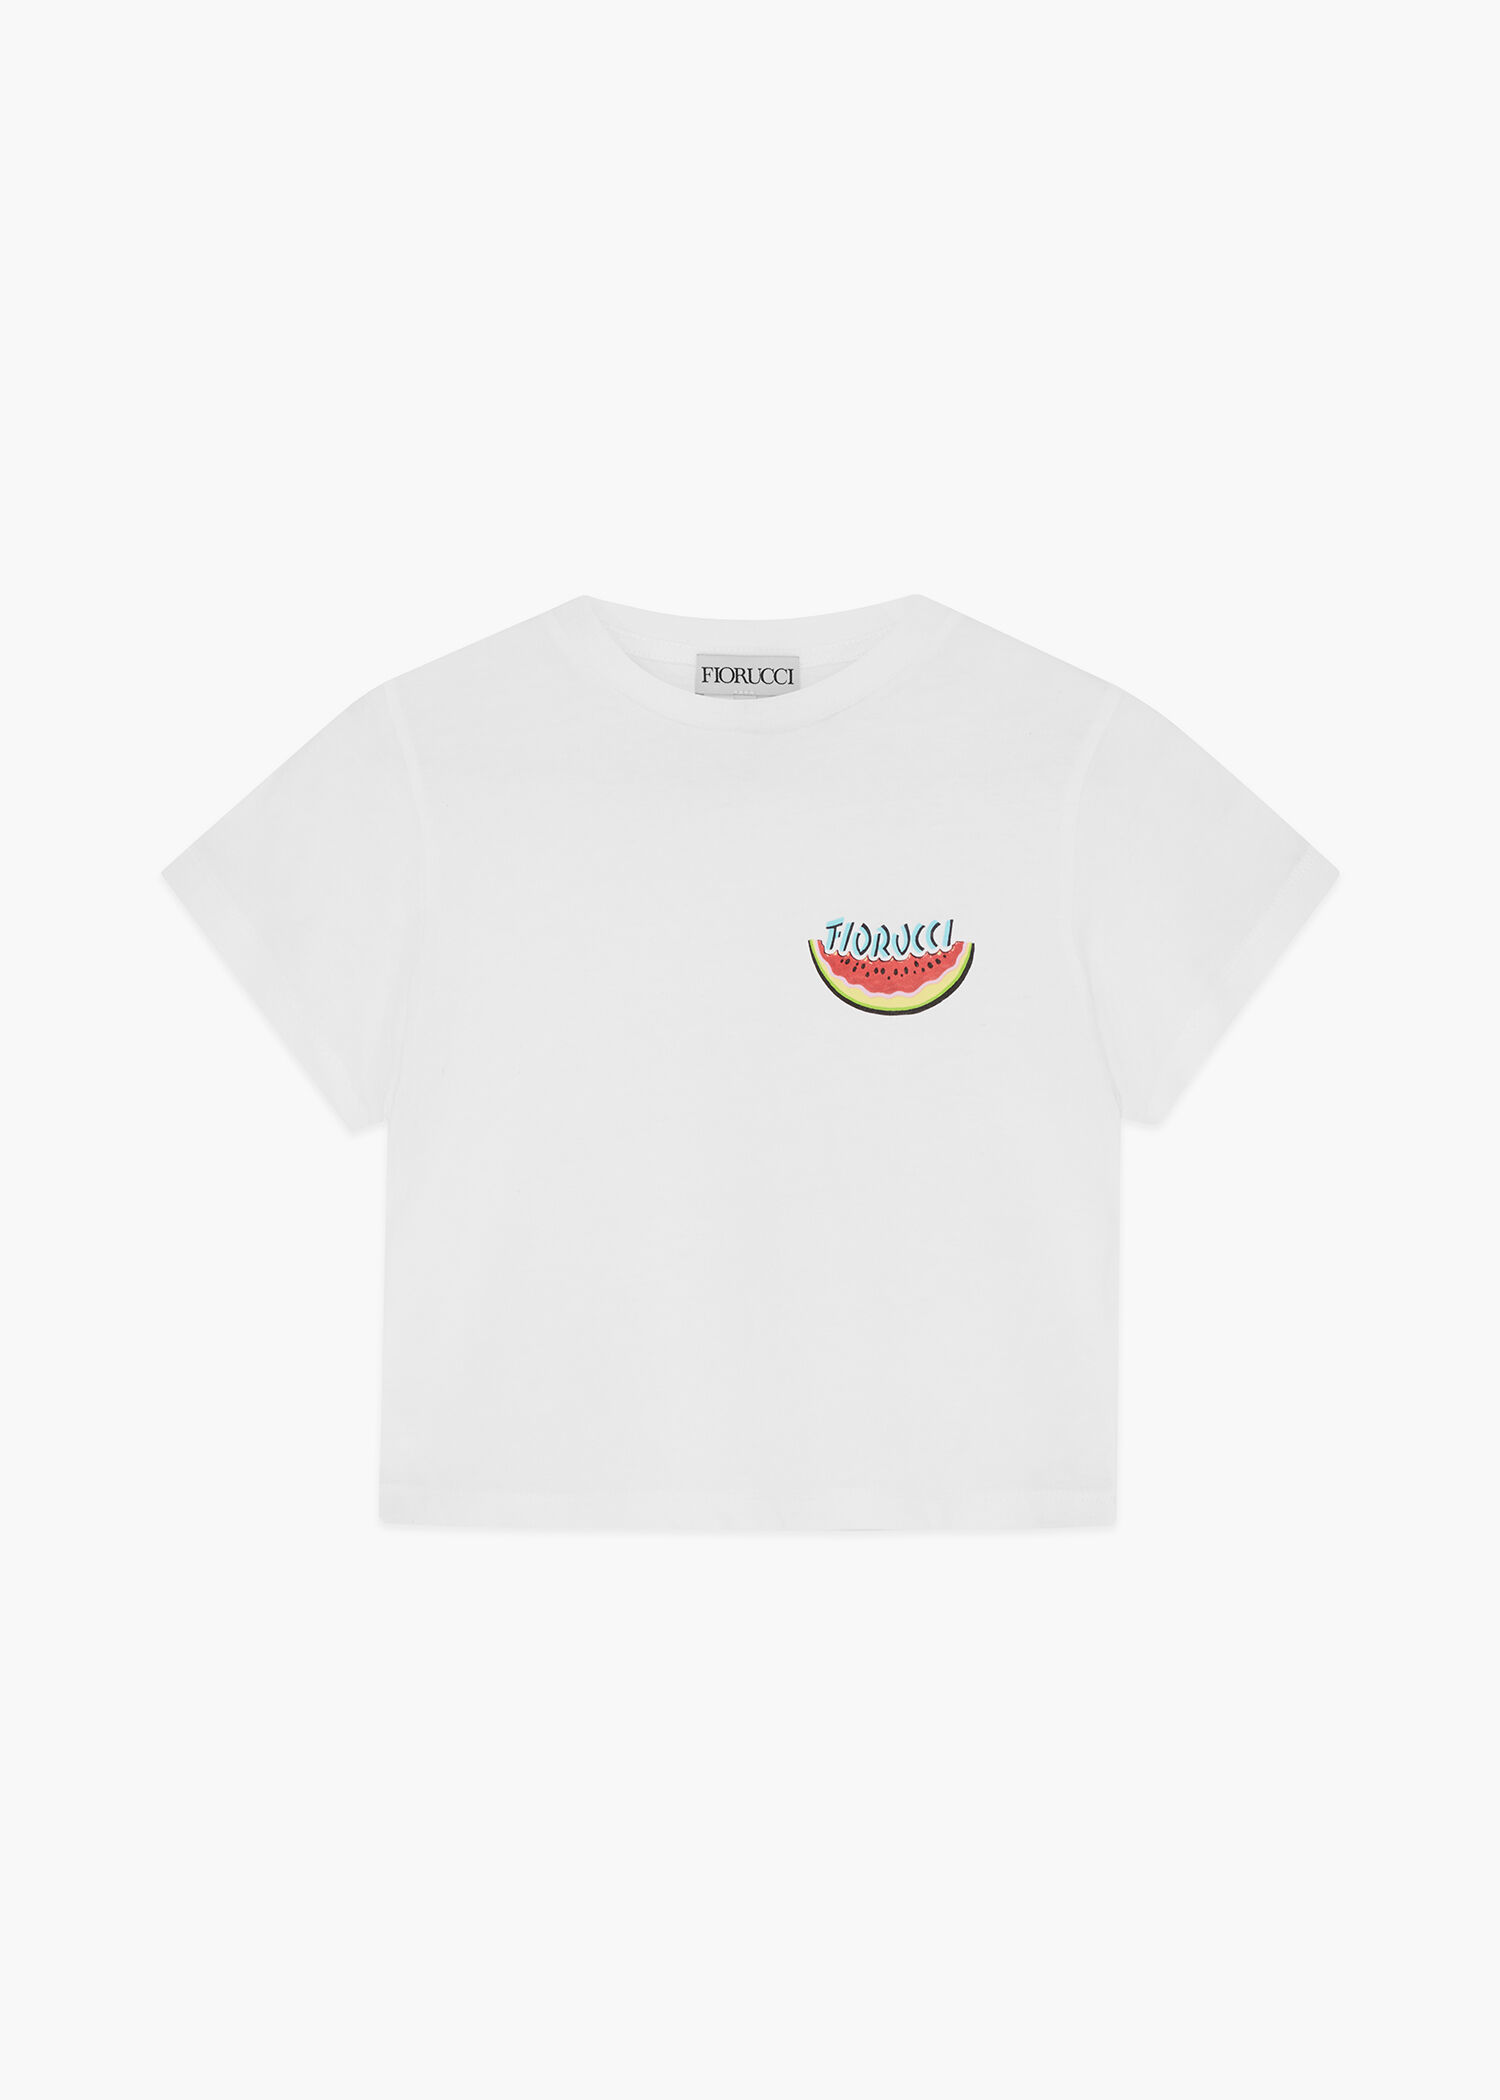 Watermelon Emblem Baby T-Shirt White